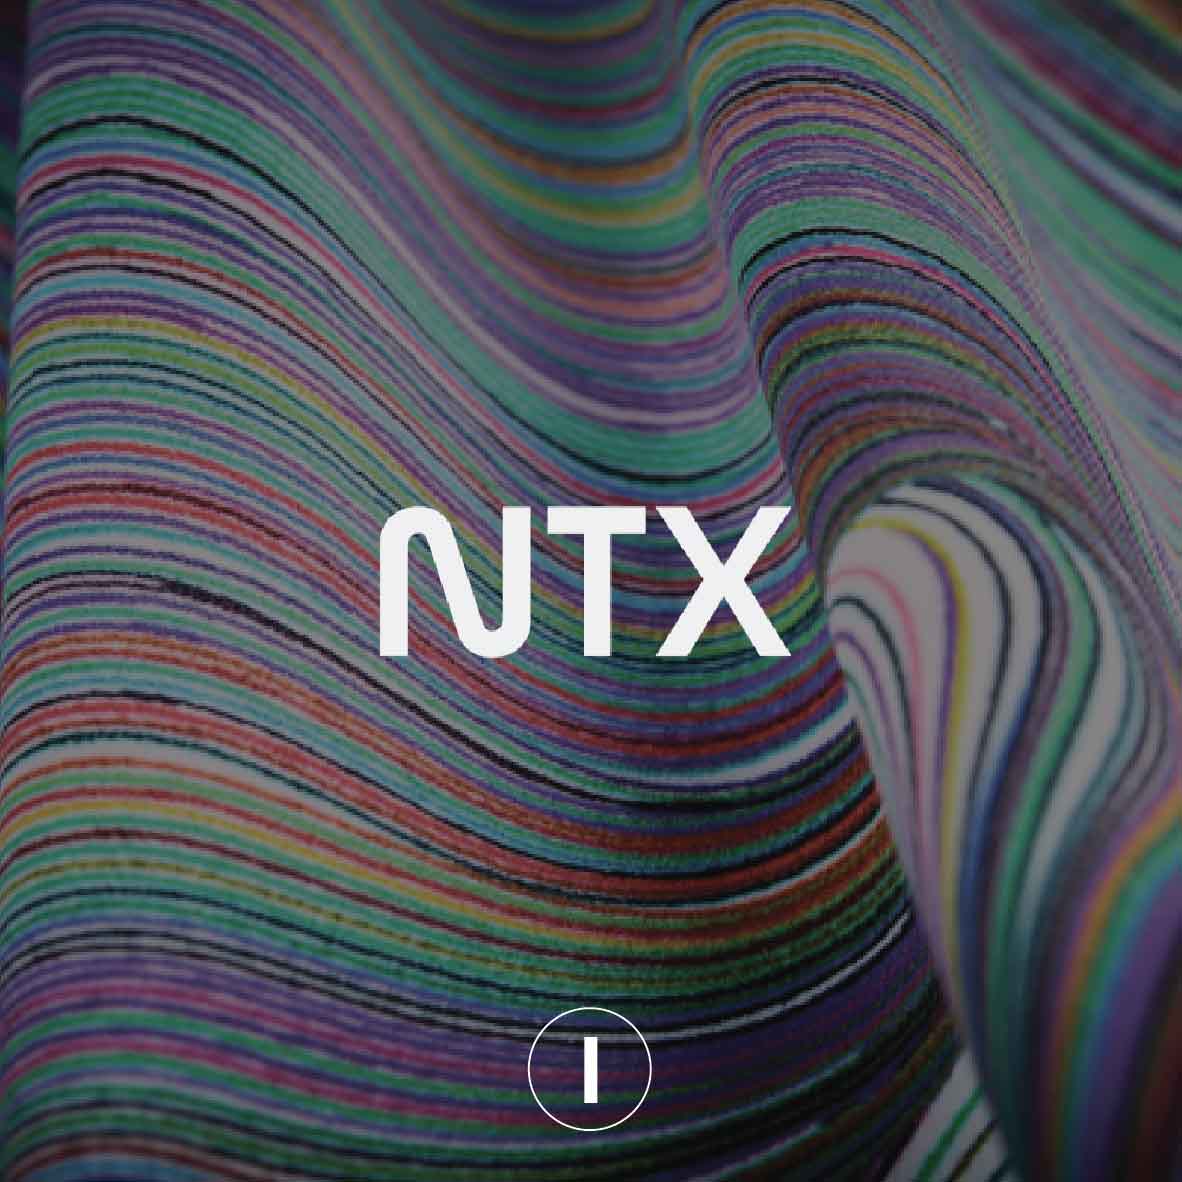 NTX